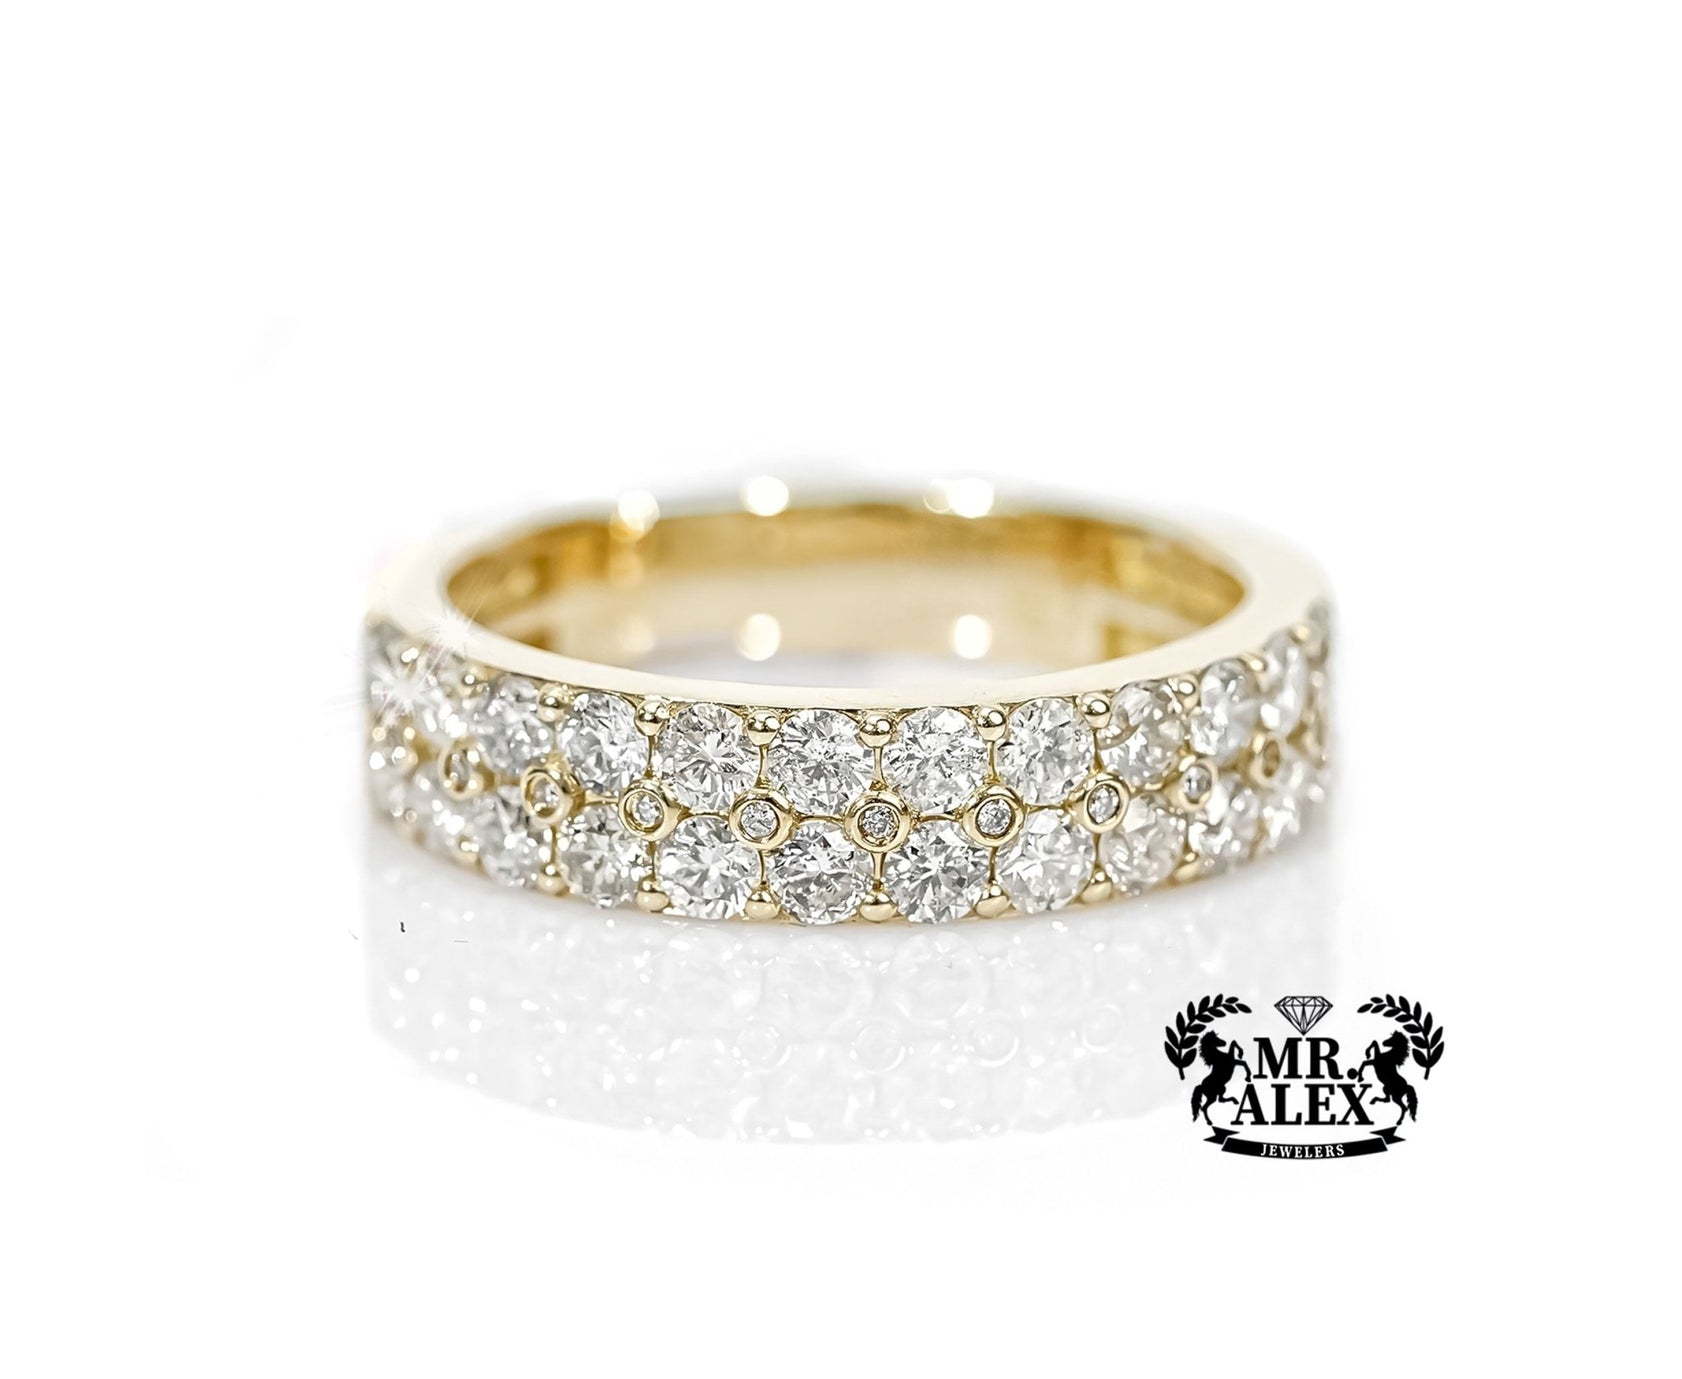 10k Gold Double Row Diamond Ring Band 1.75ct - Mr. Alex Jewelry